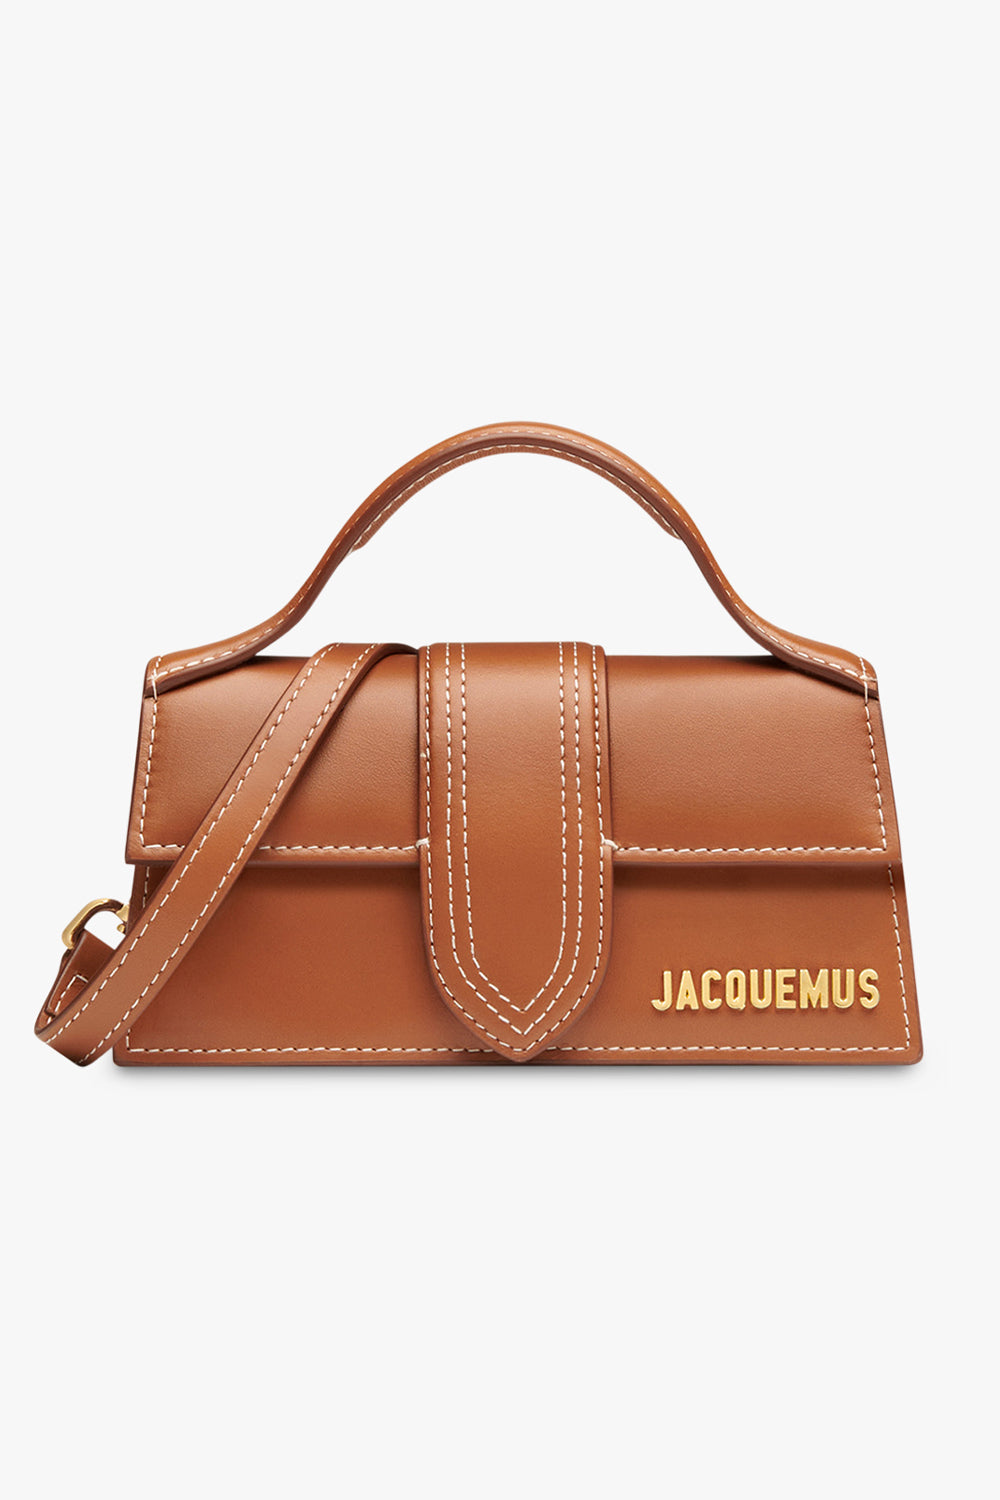 JACQUEMUS BAGS BROWN LE BAMBINO BAG | LIGHT BROWN